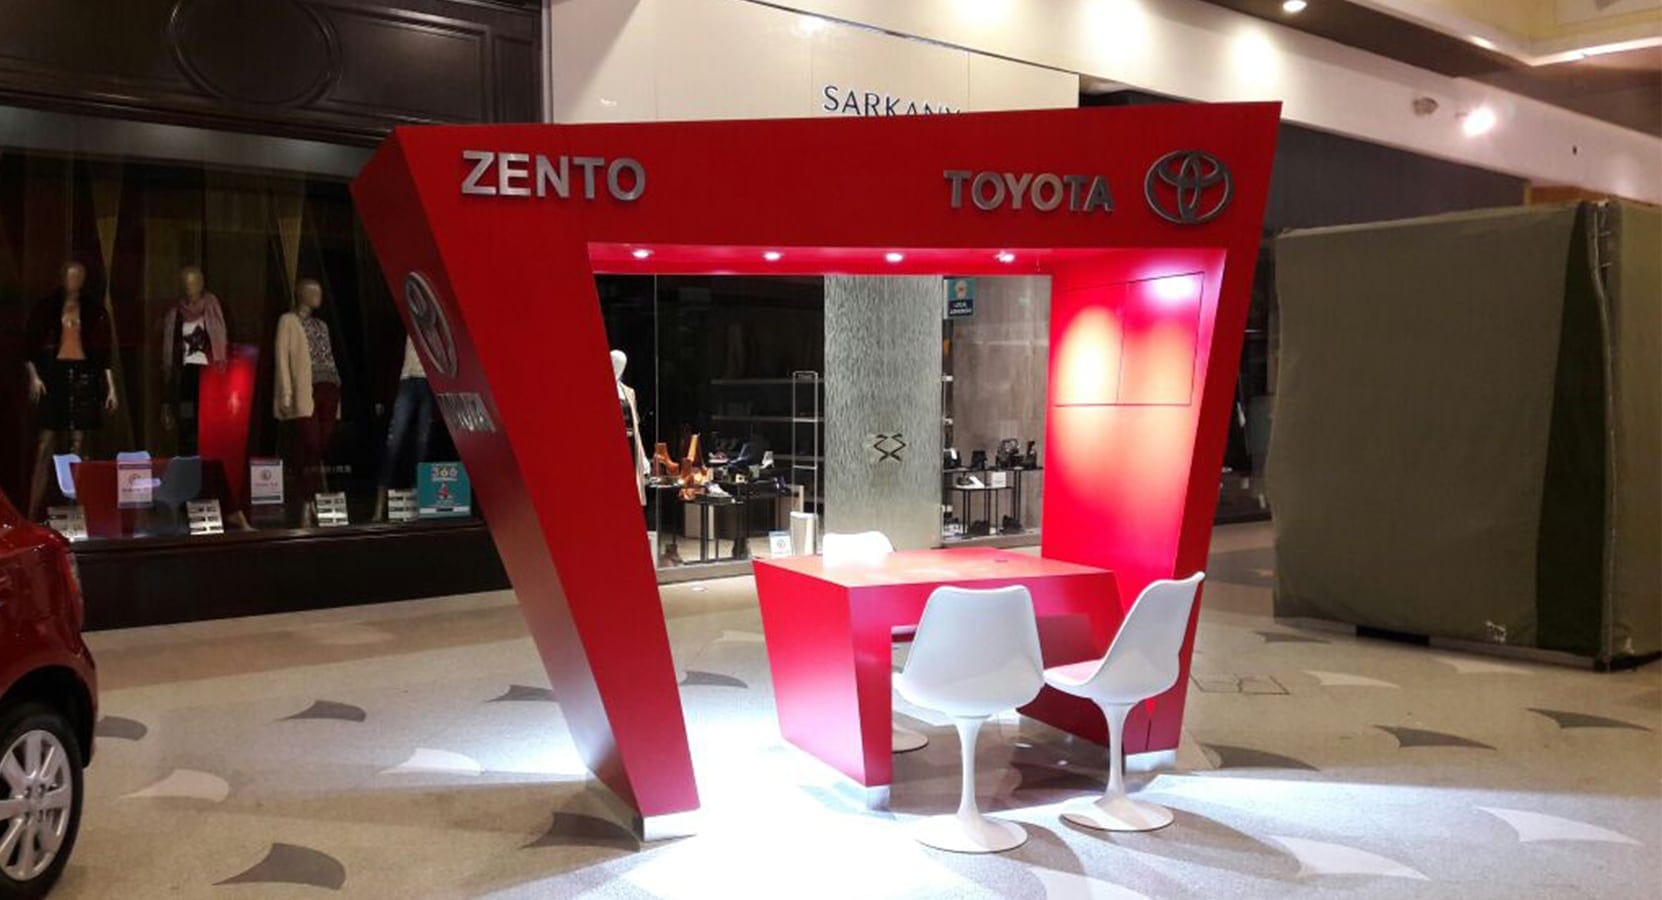 2017. Toyota Zento - Stand 9